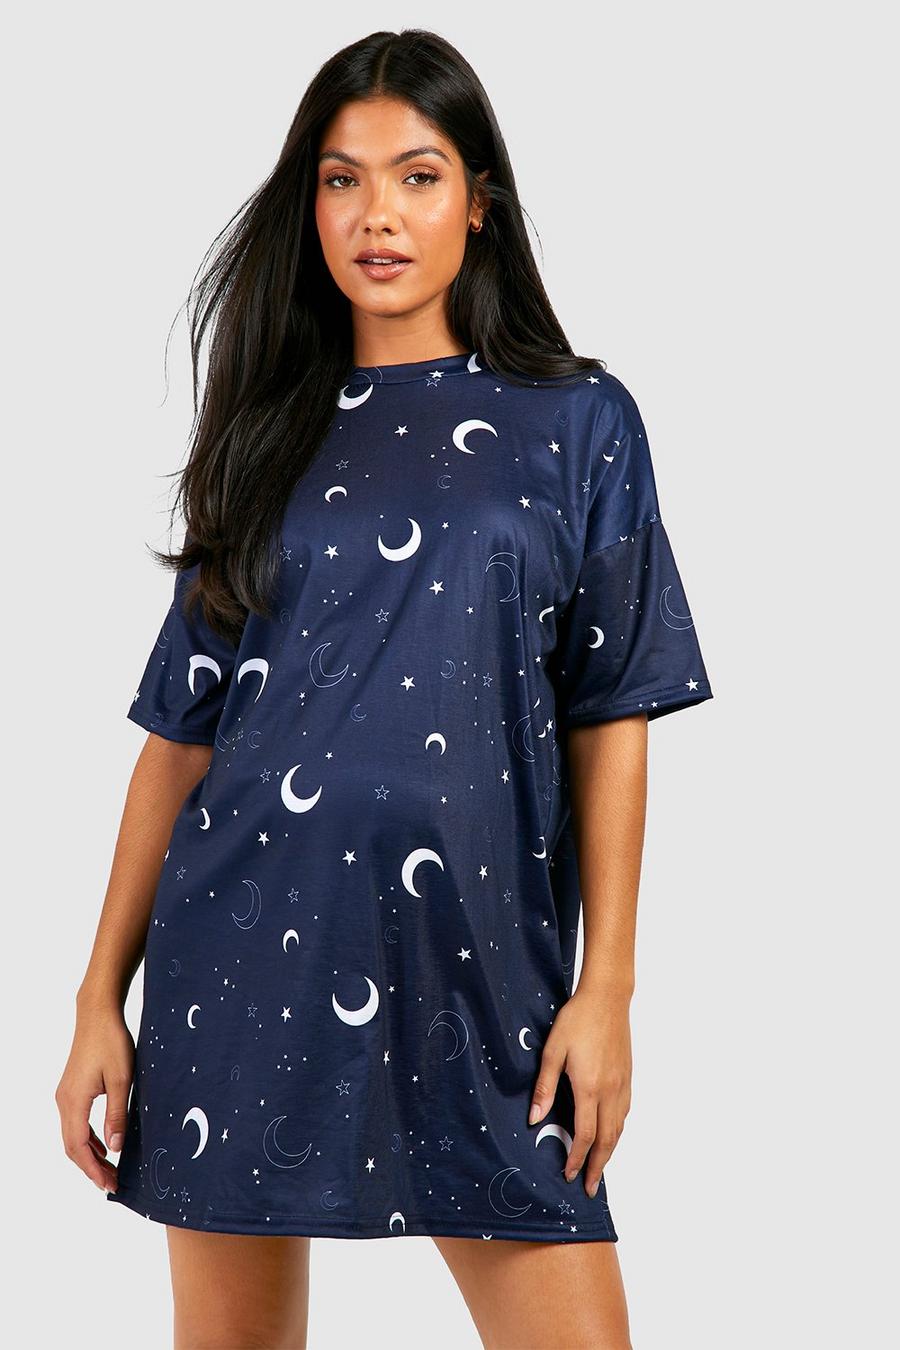 Navy Maternity Celestial Star Print Nightie